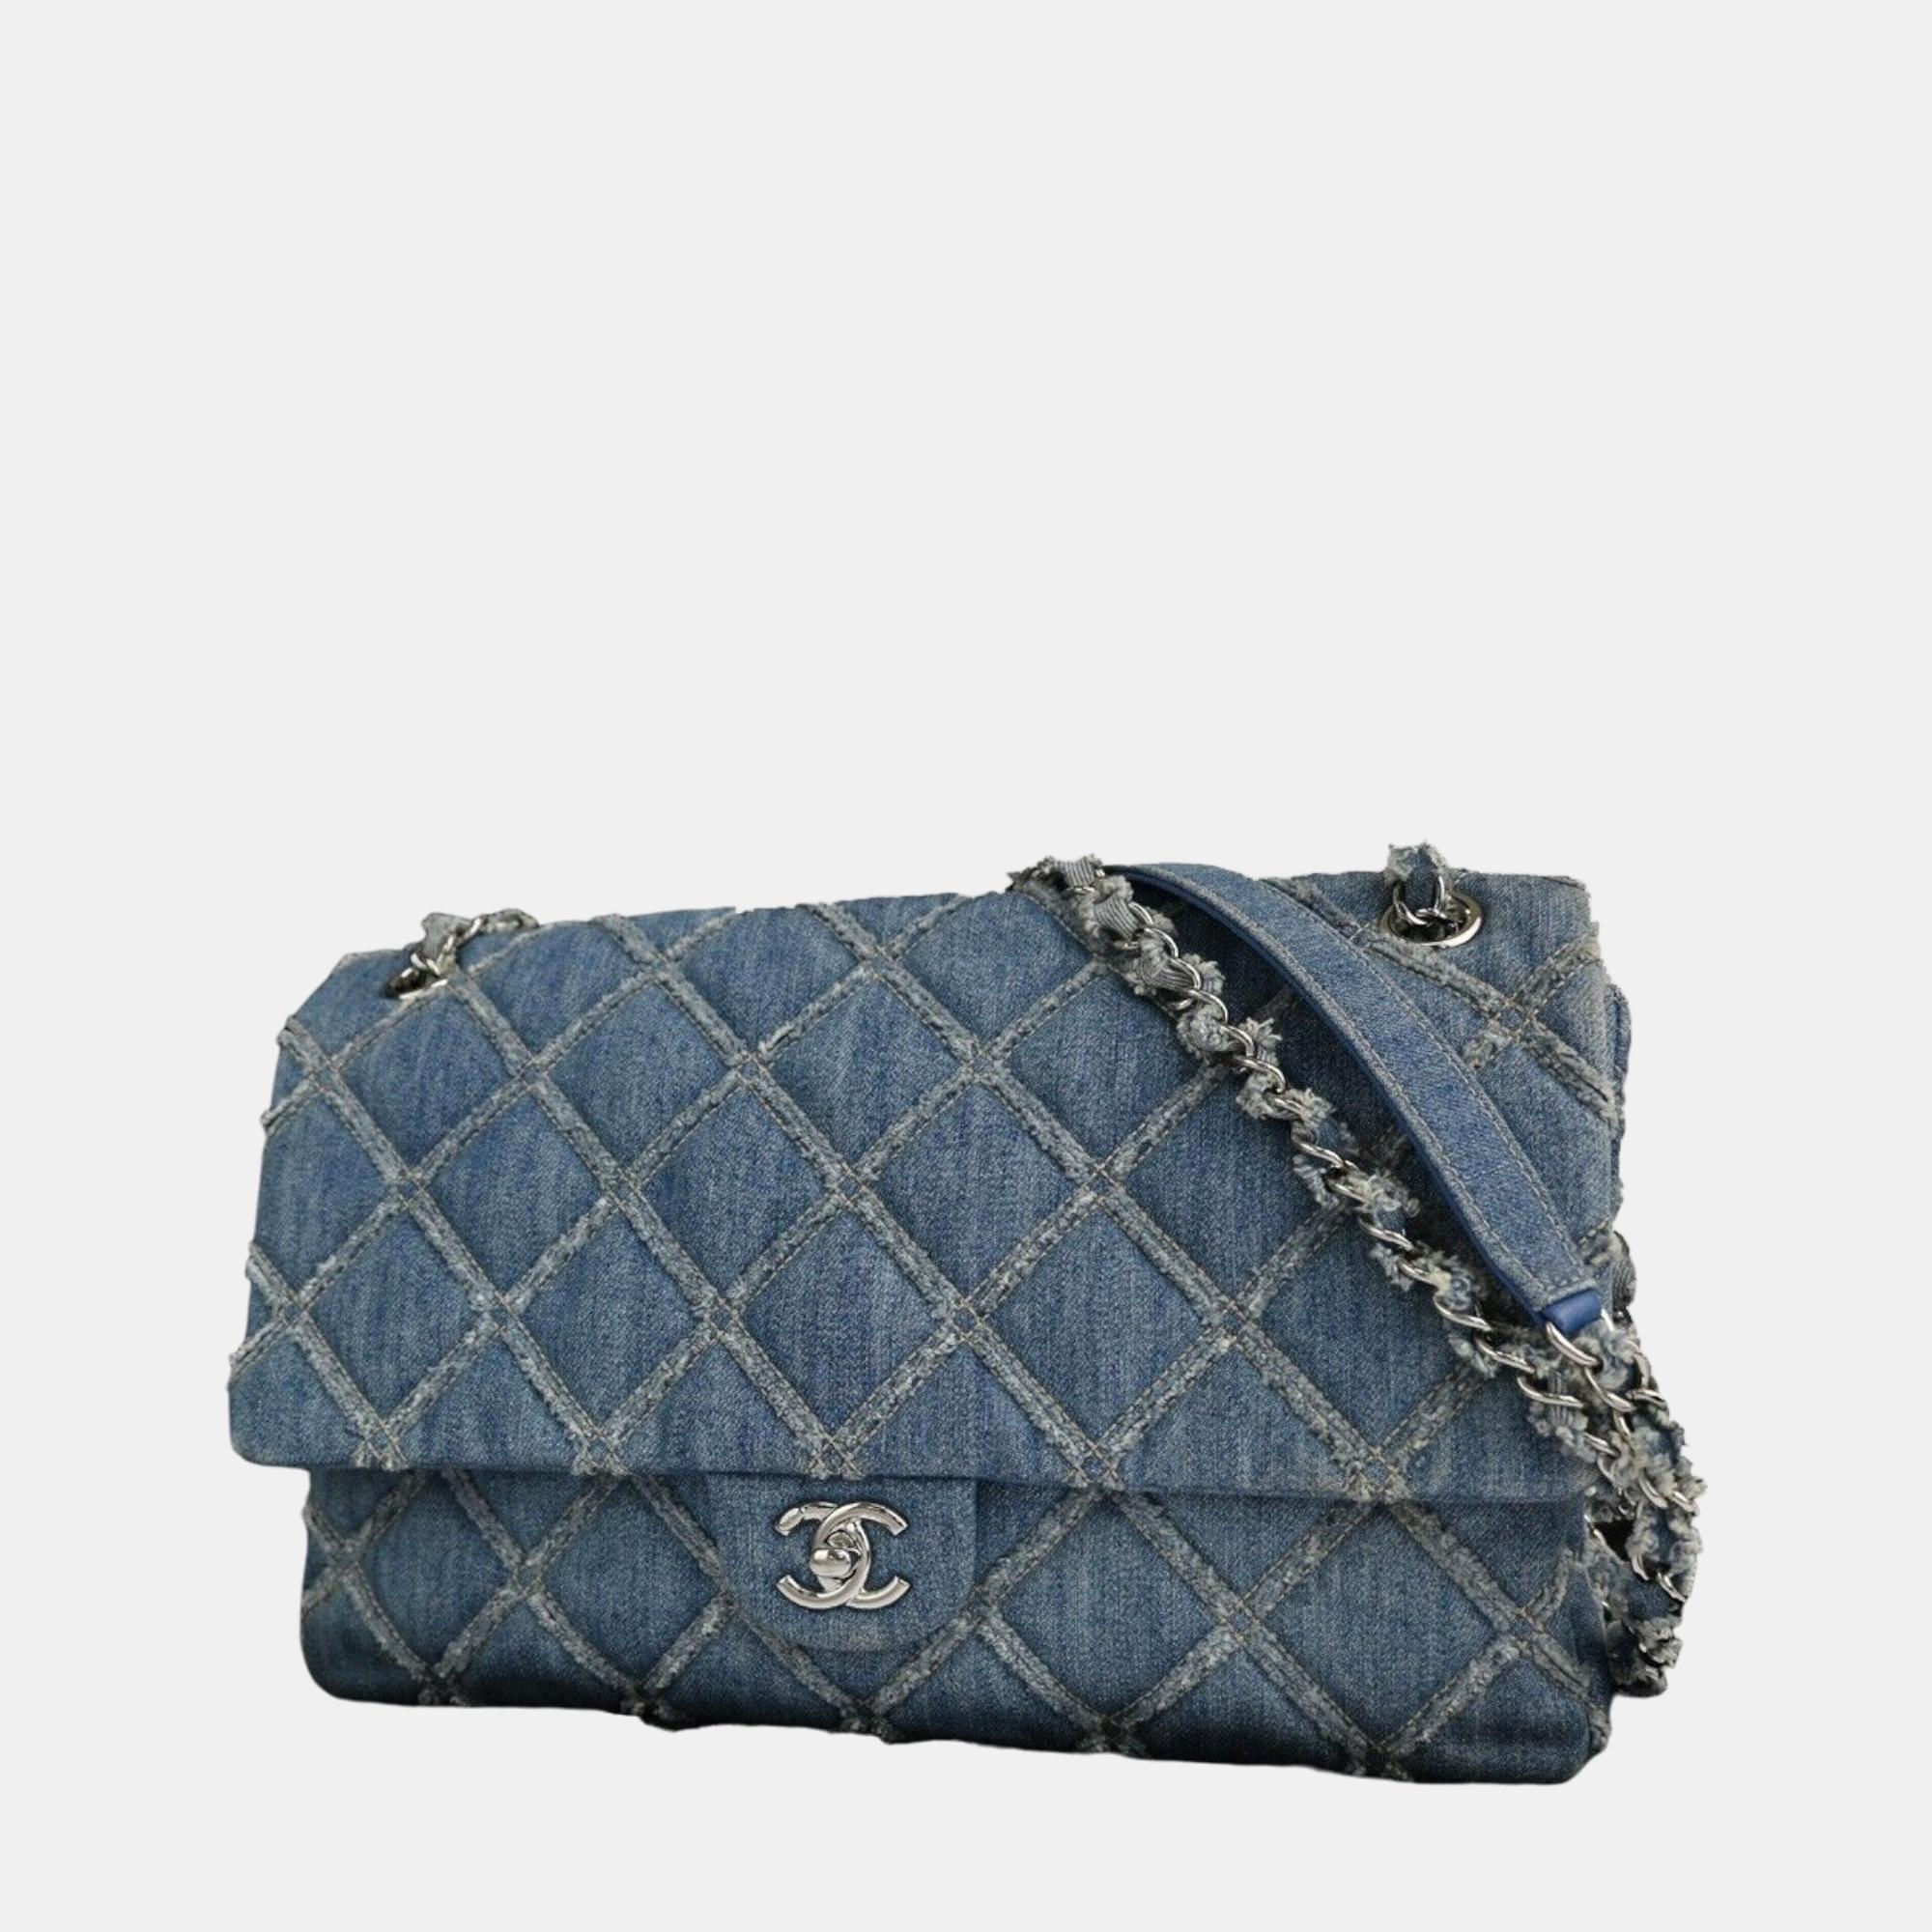 Chanel blue distressed quilted denim medium single flap bag